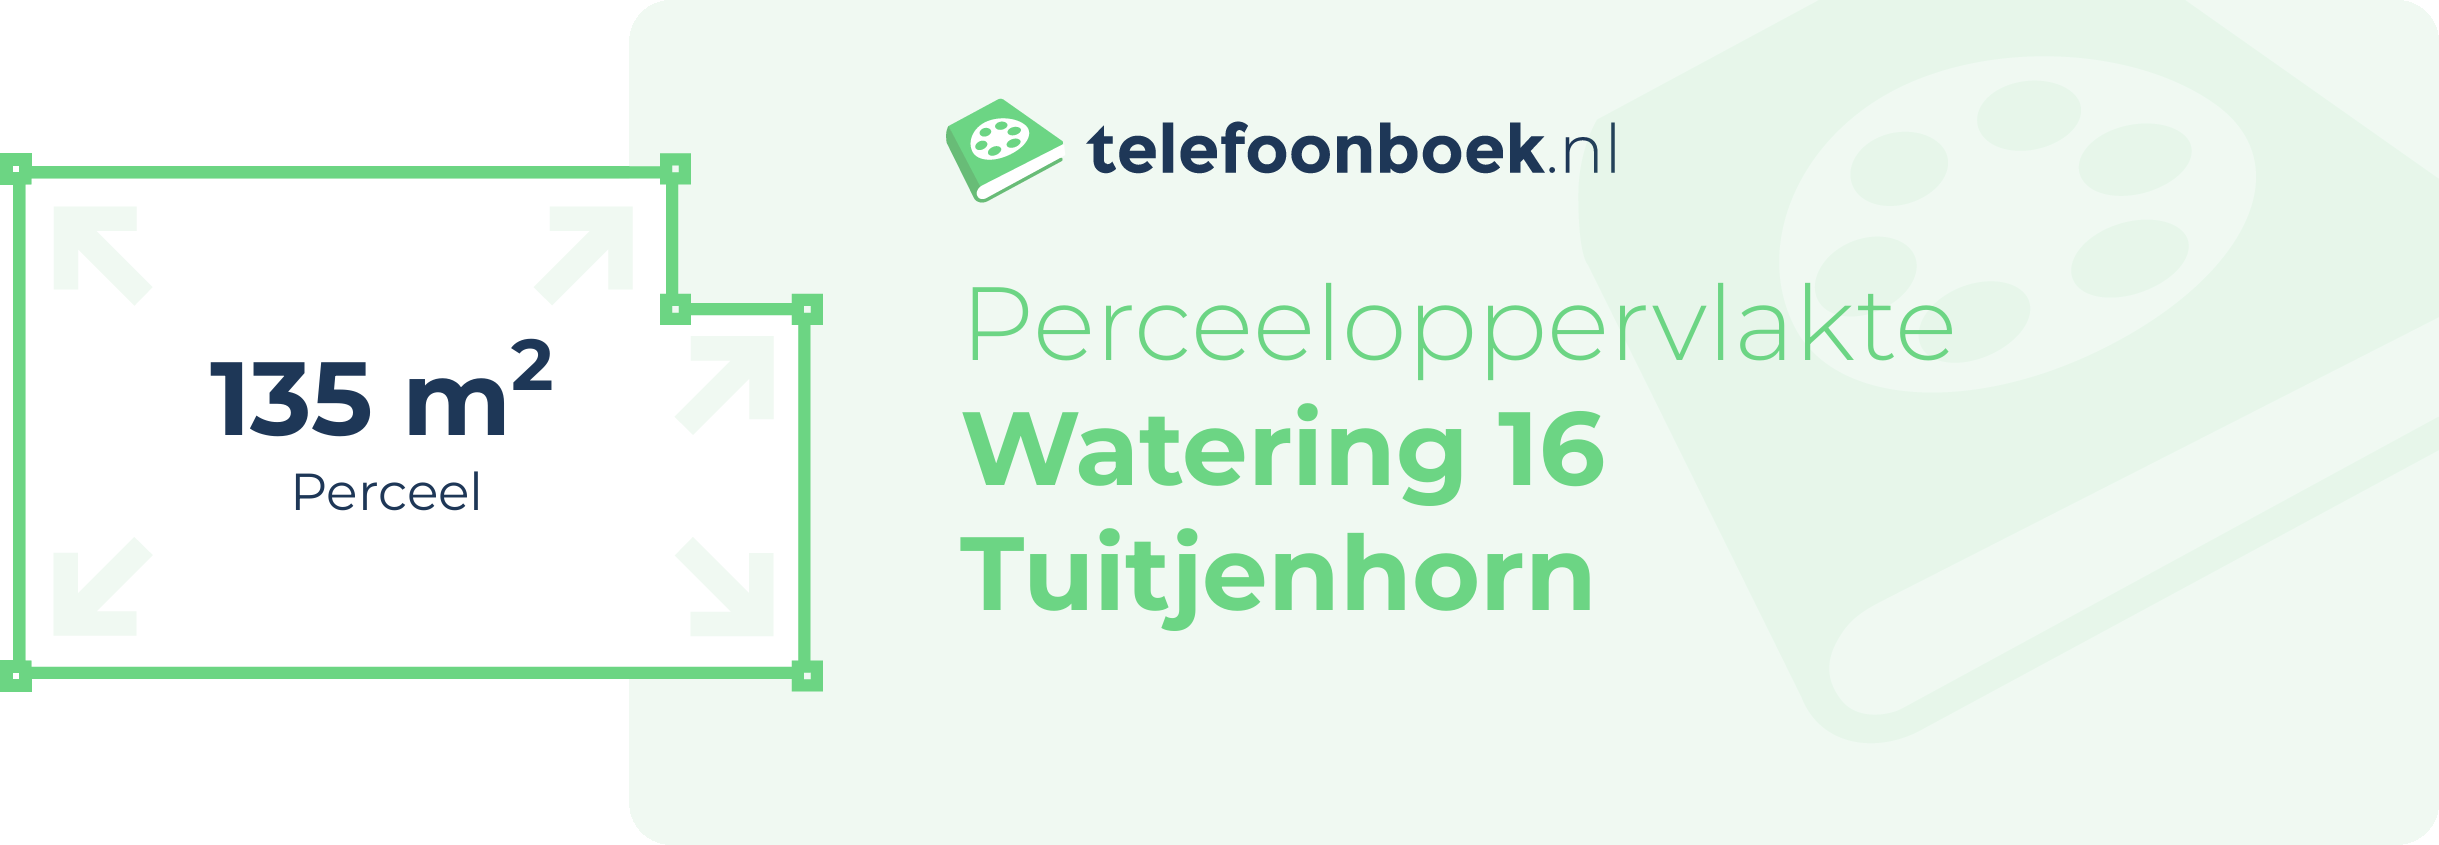 Perceeloppervlakte Watering 16 Tuitjenhorn